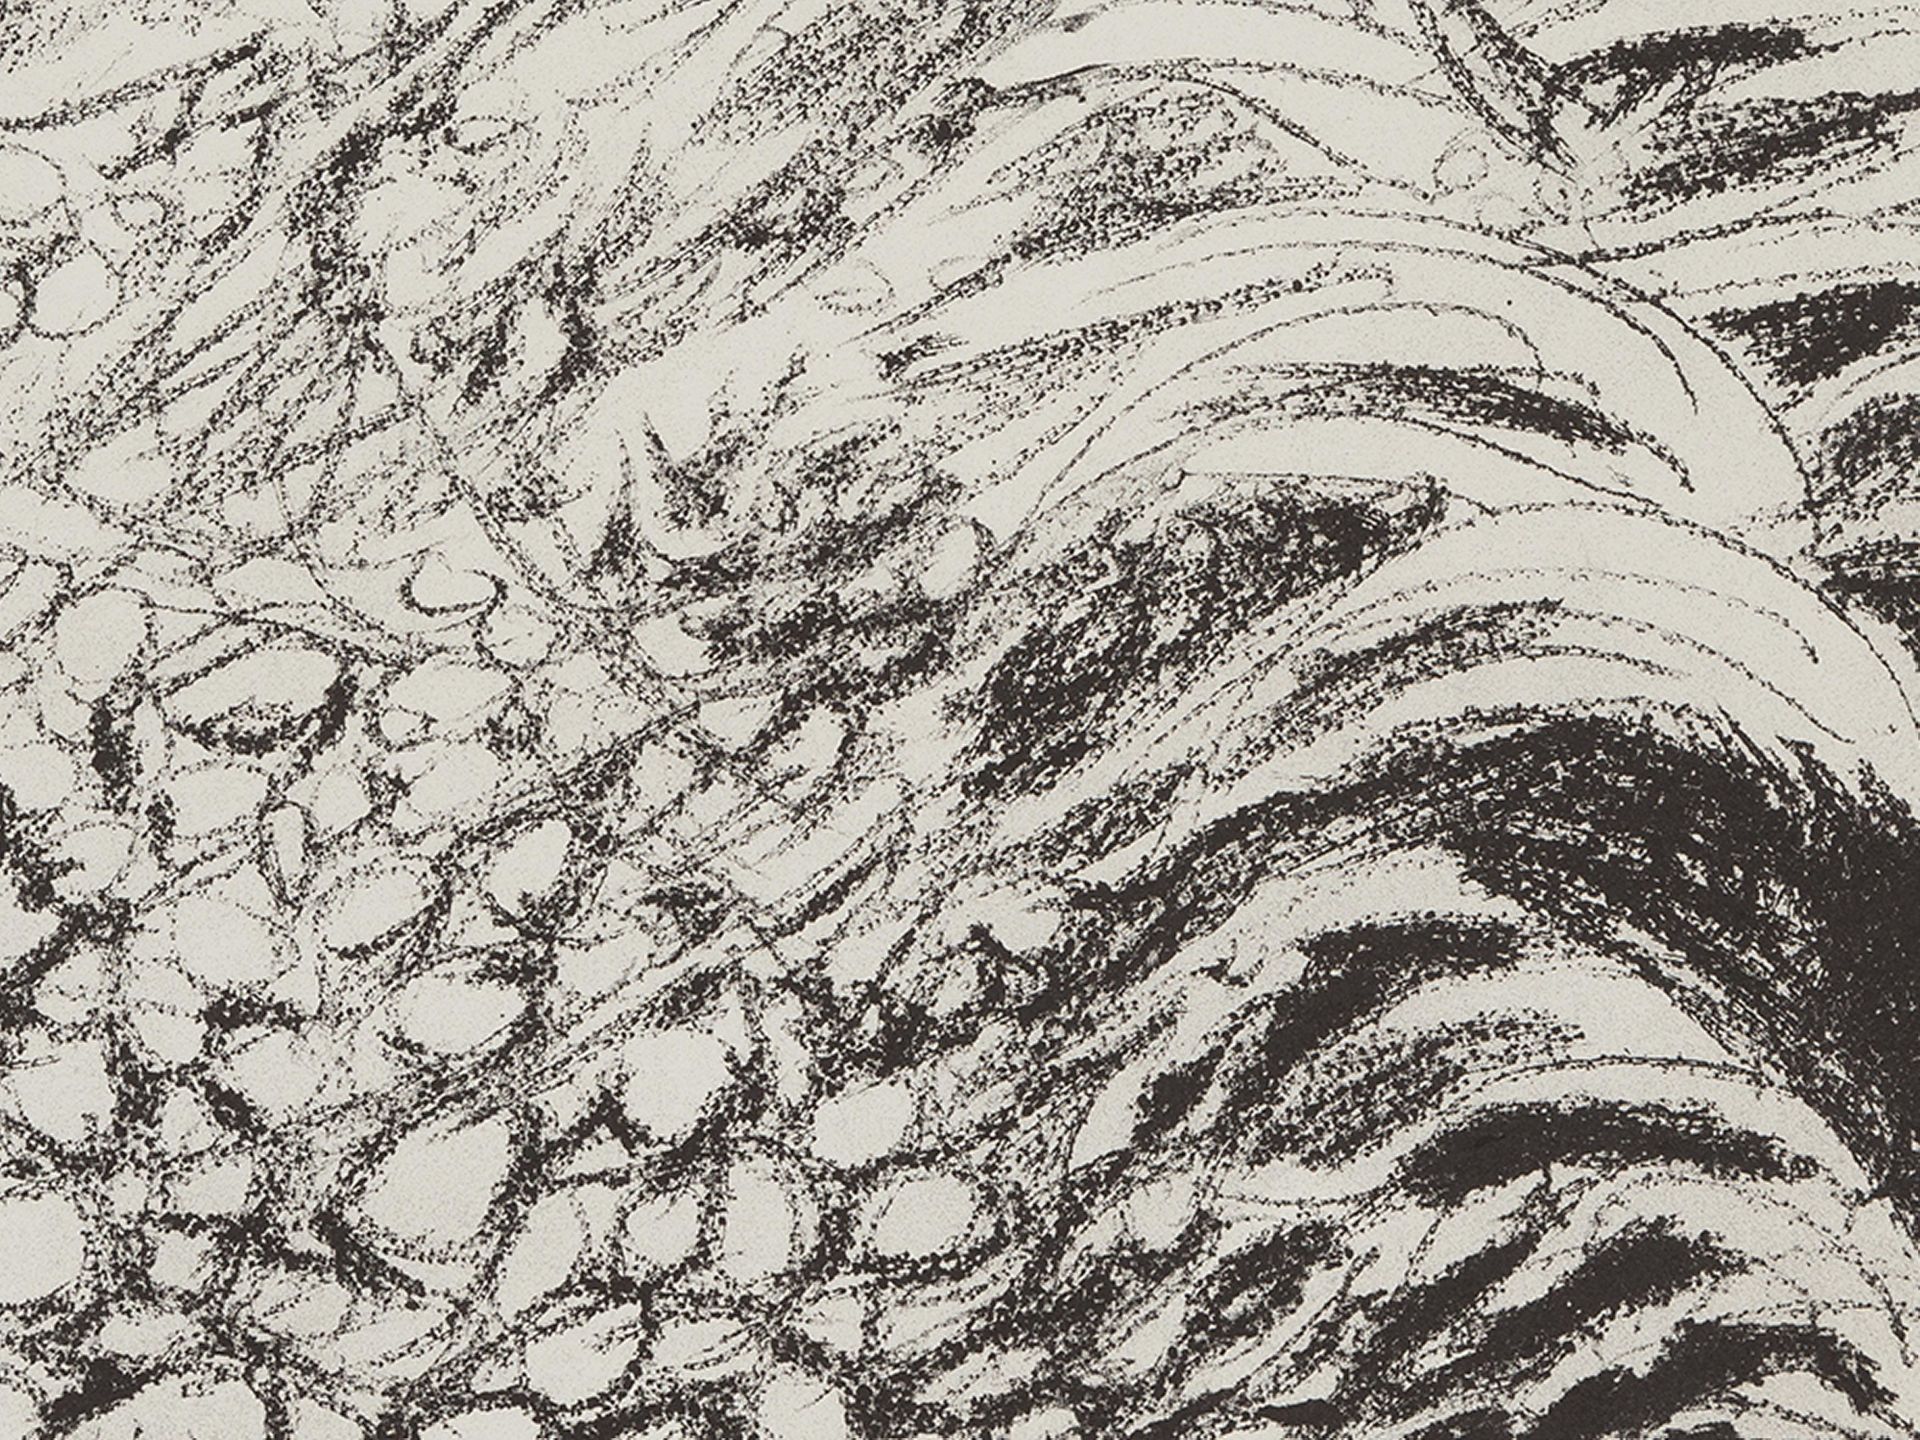 Fazzini, Pericle 1913 Grottemmare - 1987 Rom Feld Lithografie auf Papier 1970er Jahre Signiert. - Bild 4 aus 6